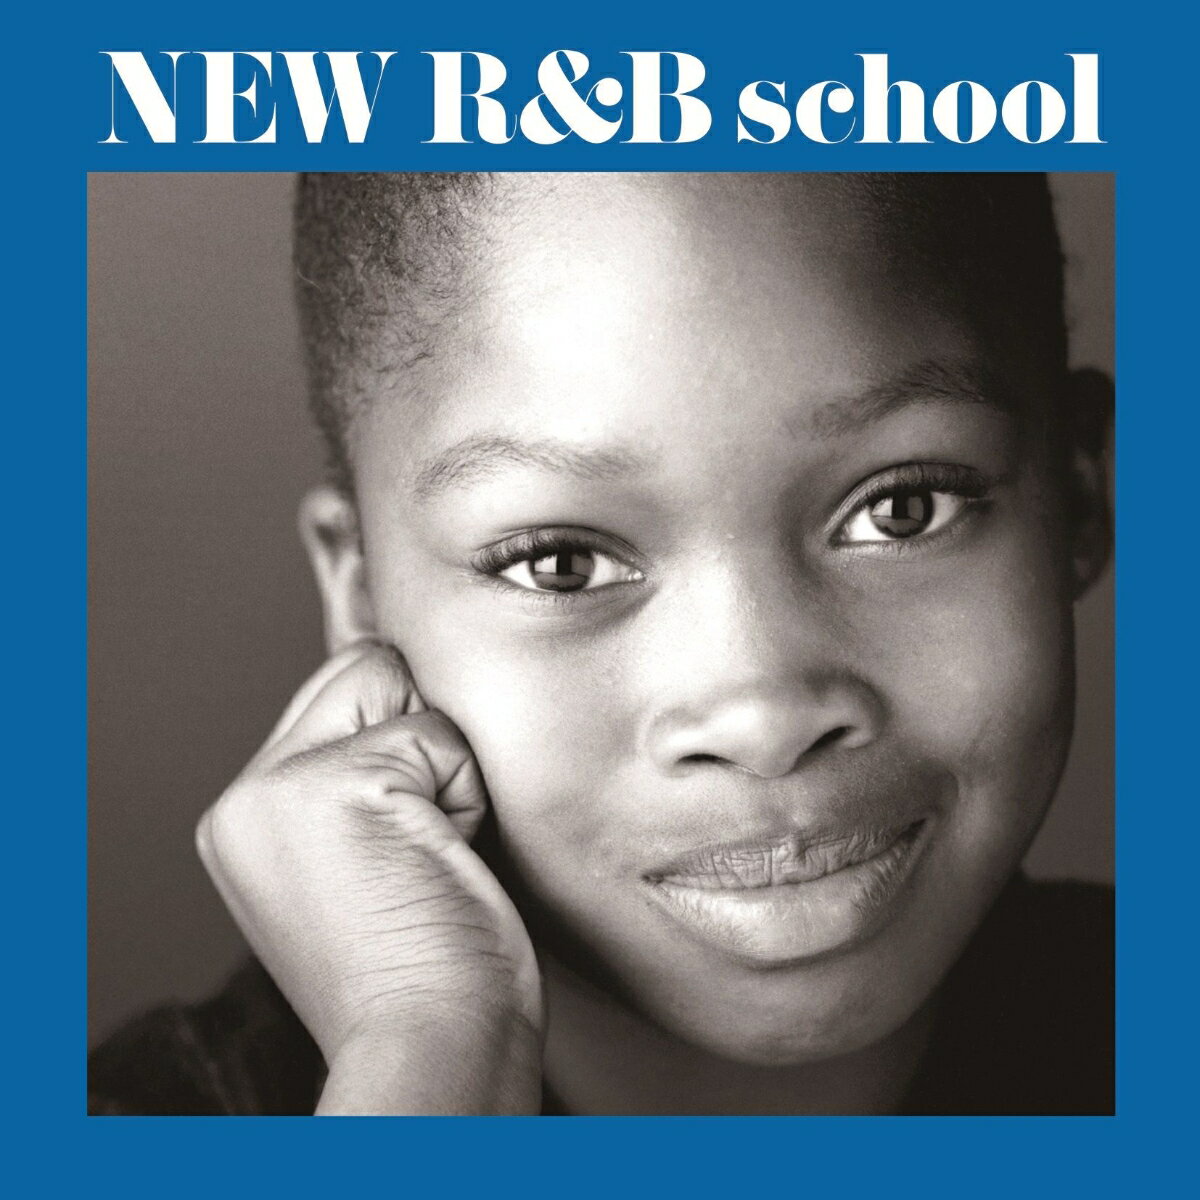 NEW R&B school 新R&B教室